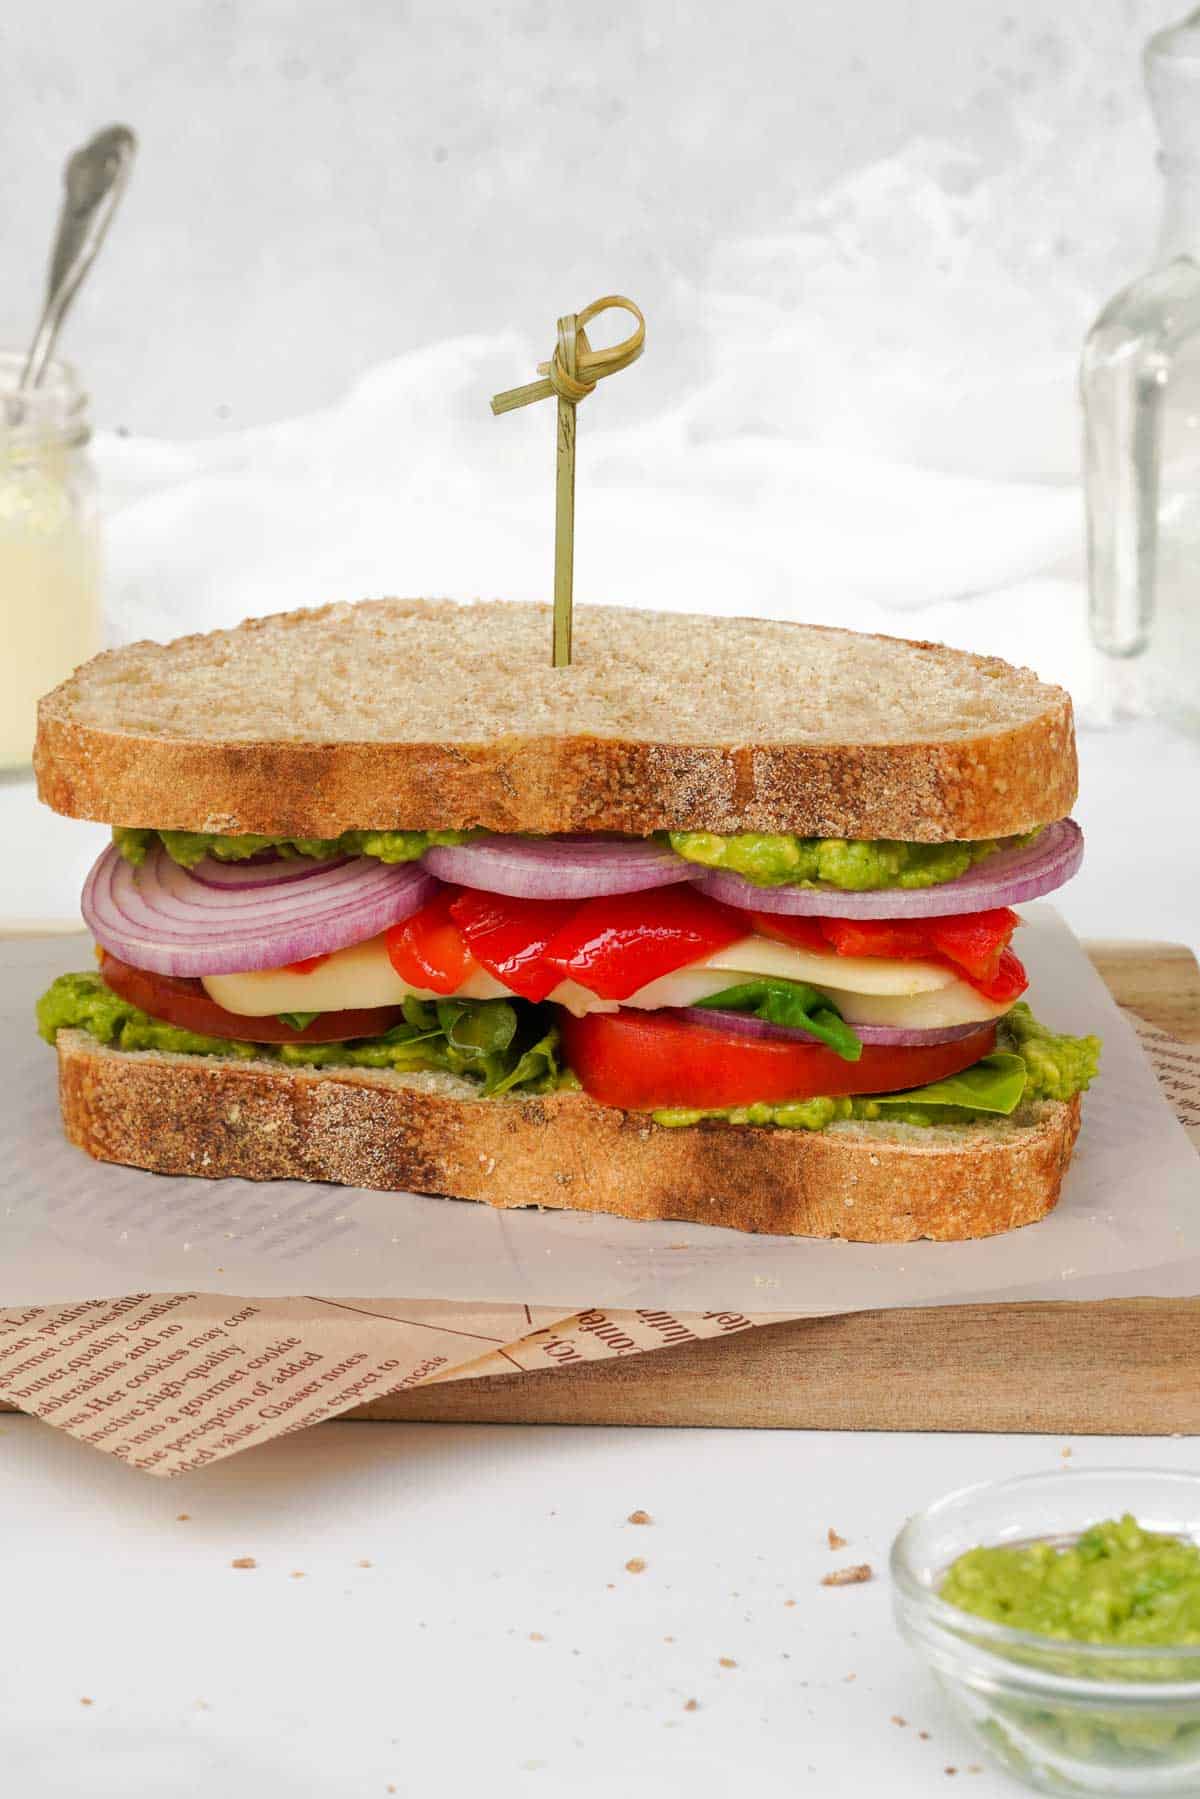 A vegetarian, Mediterranean sandwich is sitting on a cutting board next to chips.